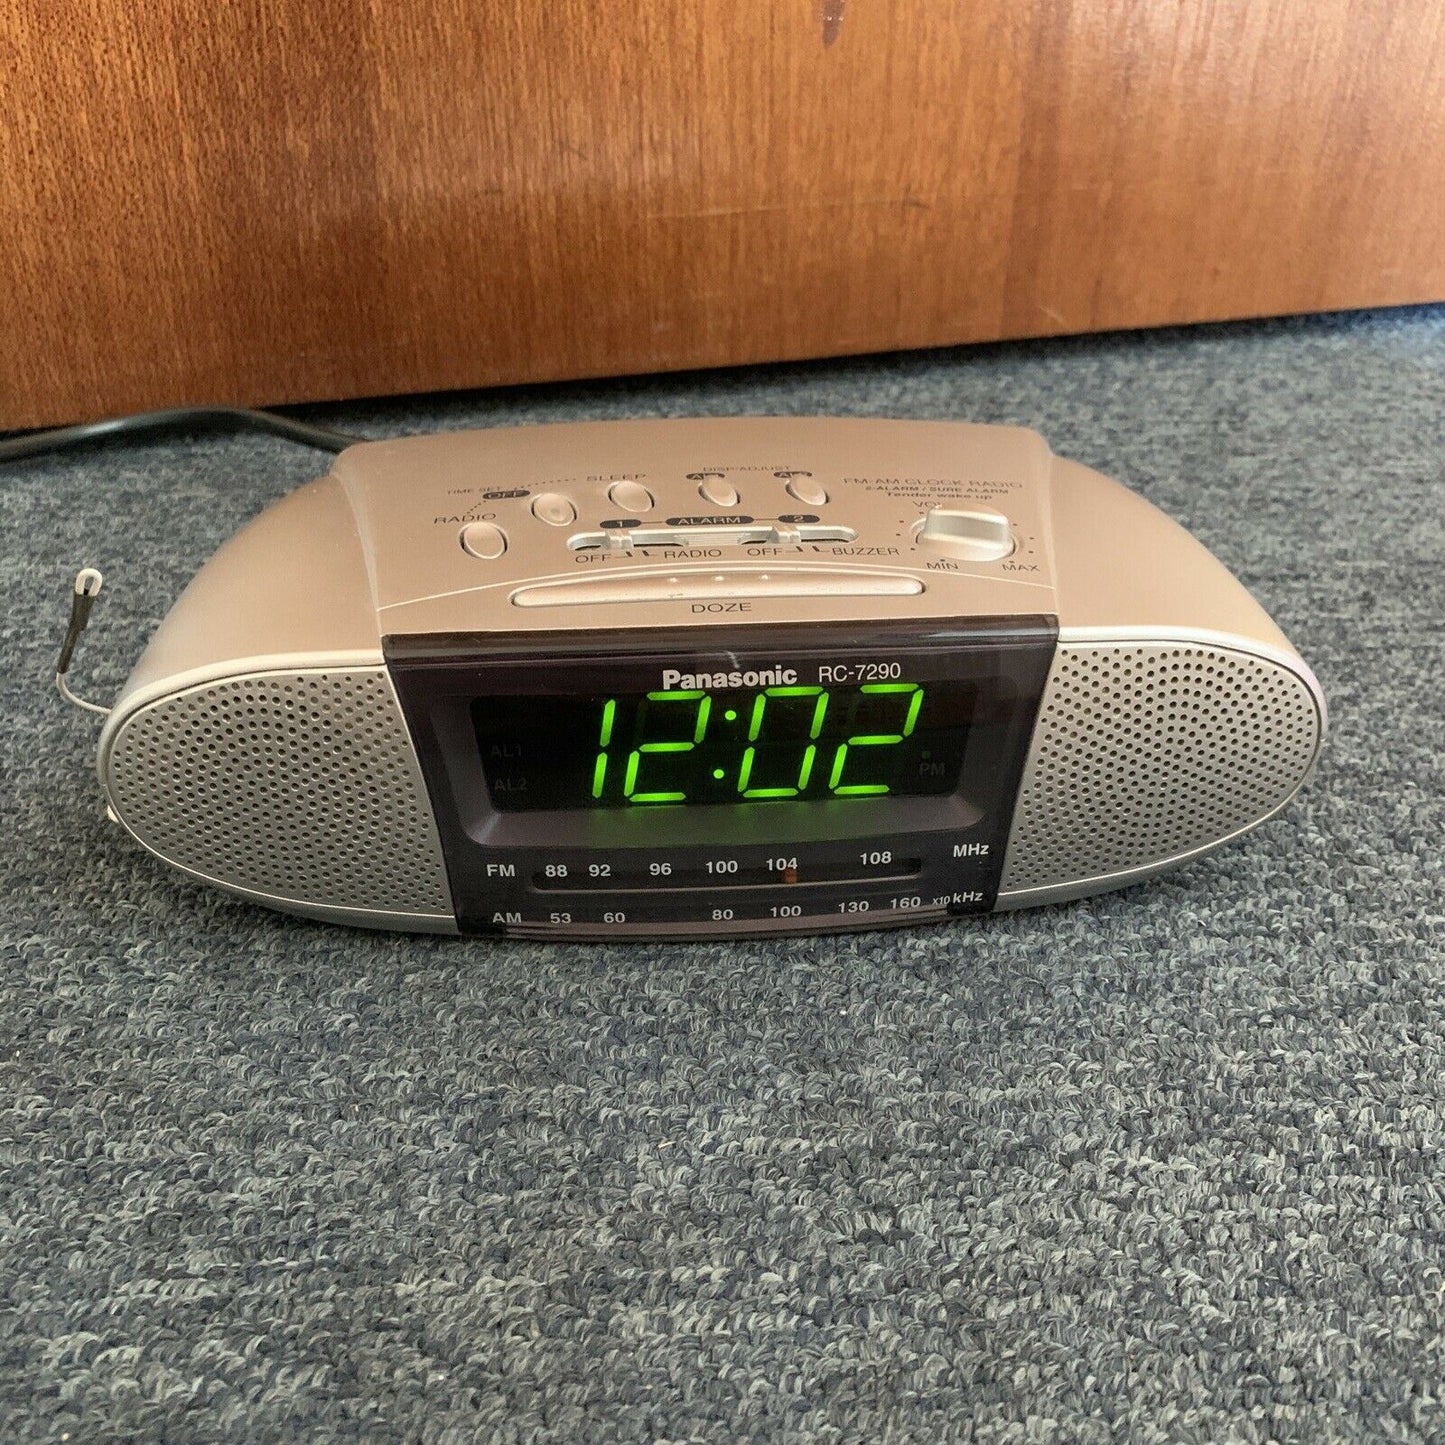 Panasonic RC-7290 AM/FM Alarm Clock Radio W Snooze Function & Battery Backup